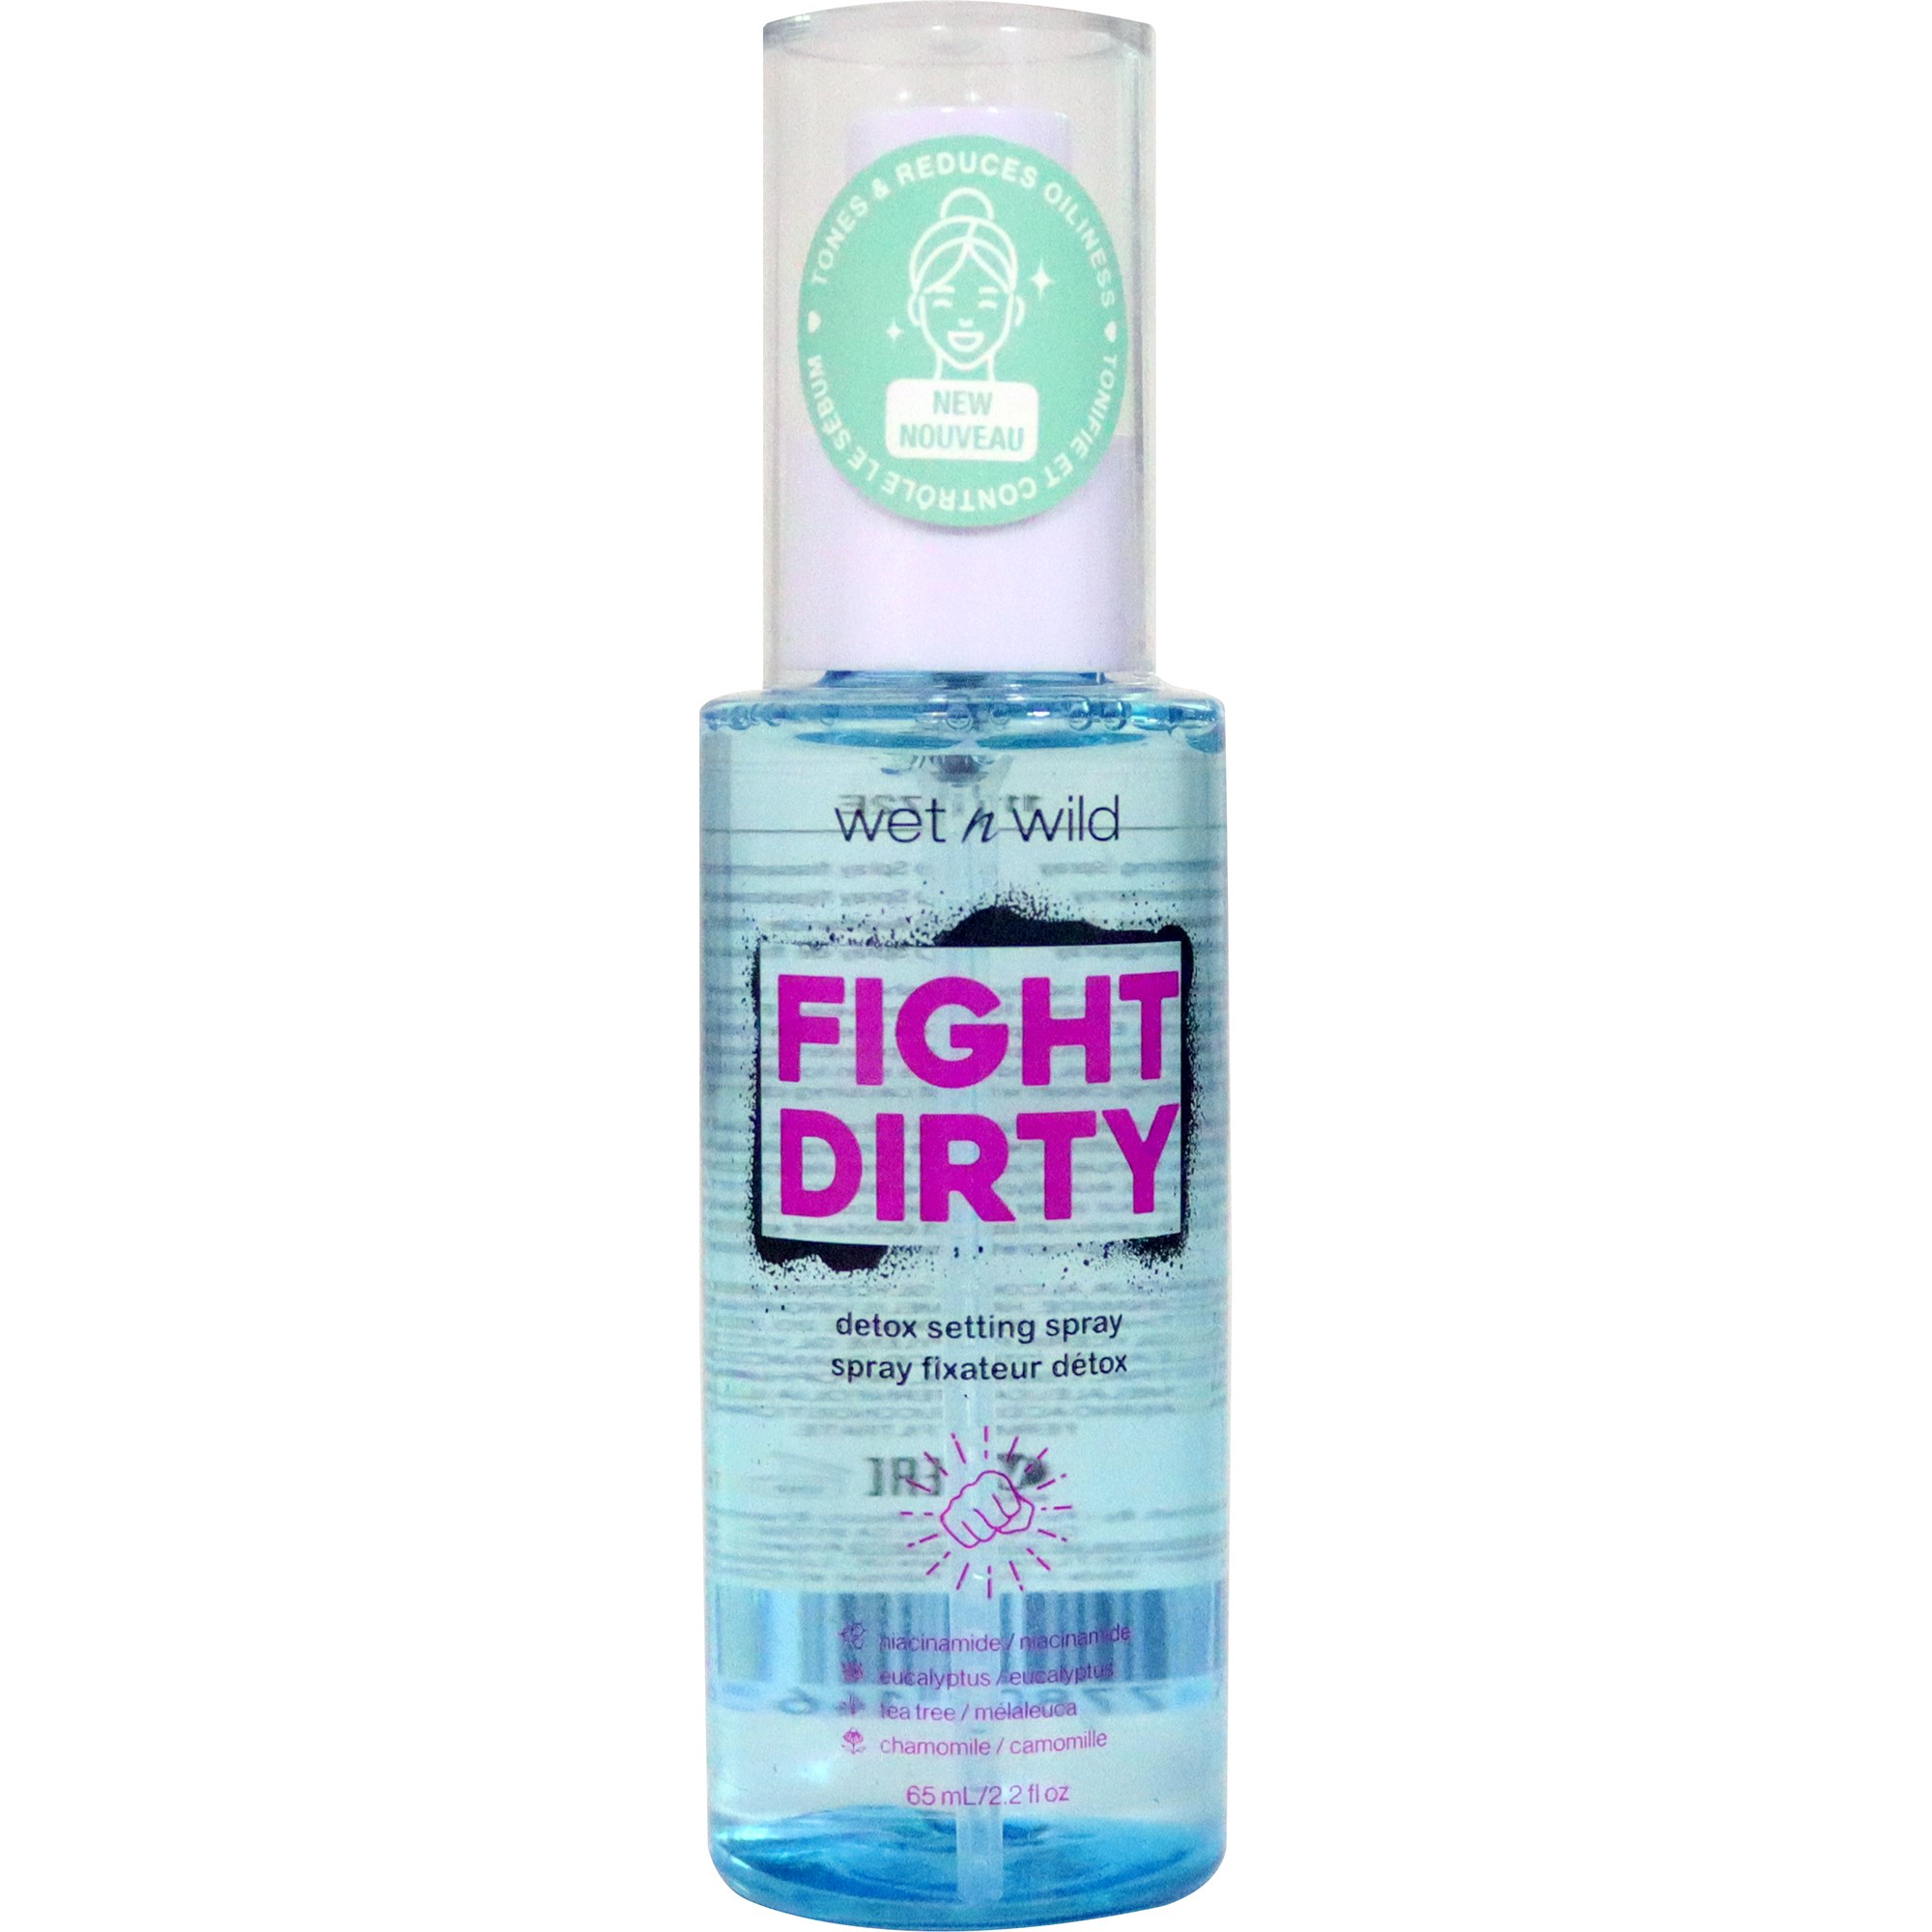 Wet n Wild Fight Dirty Clarifying Setting Spray 65 ml